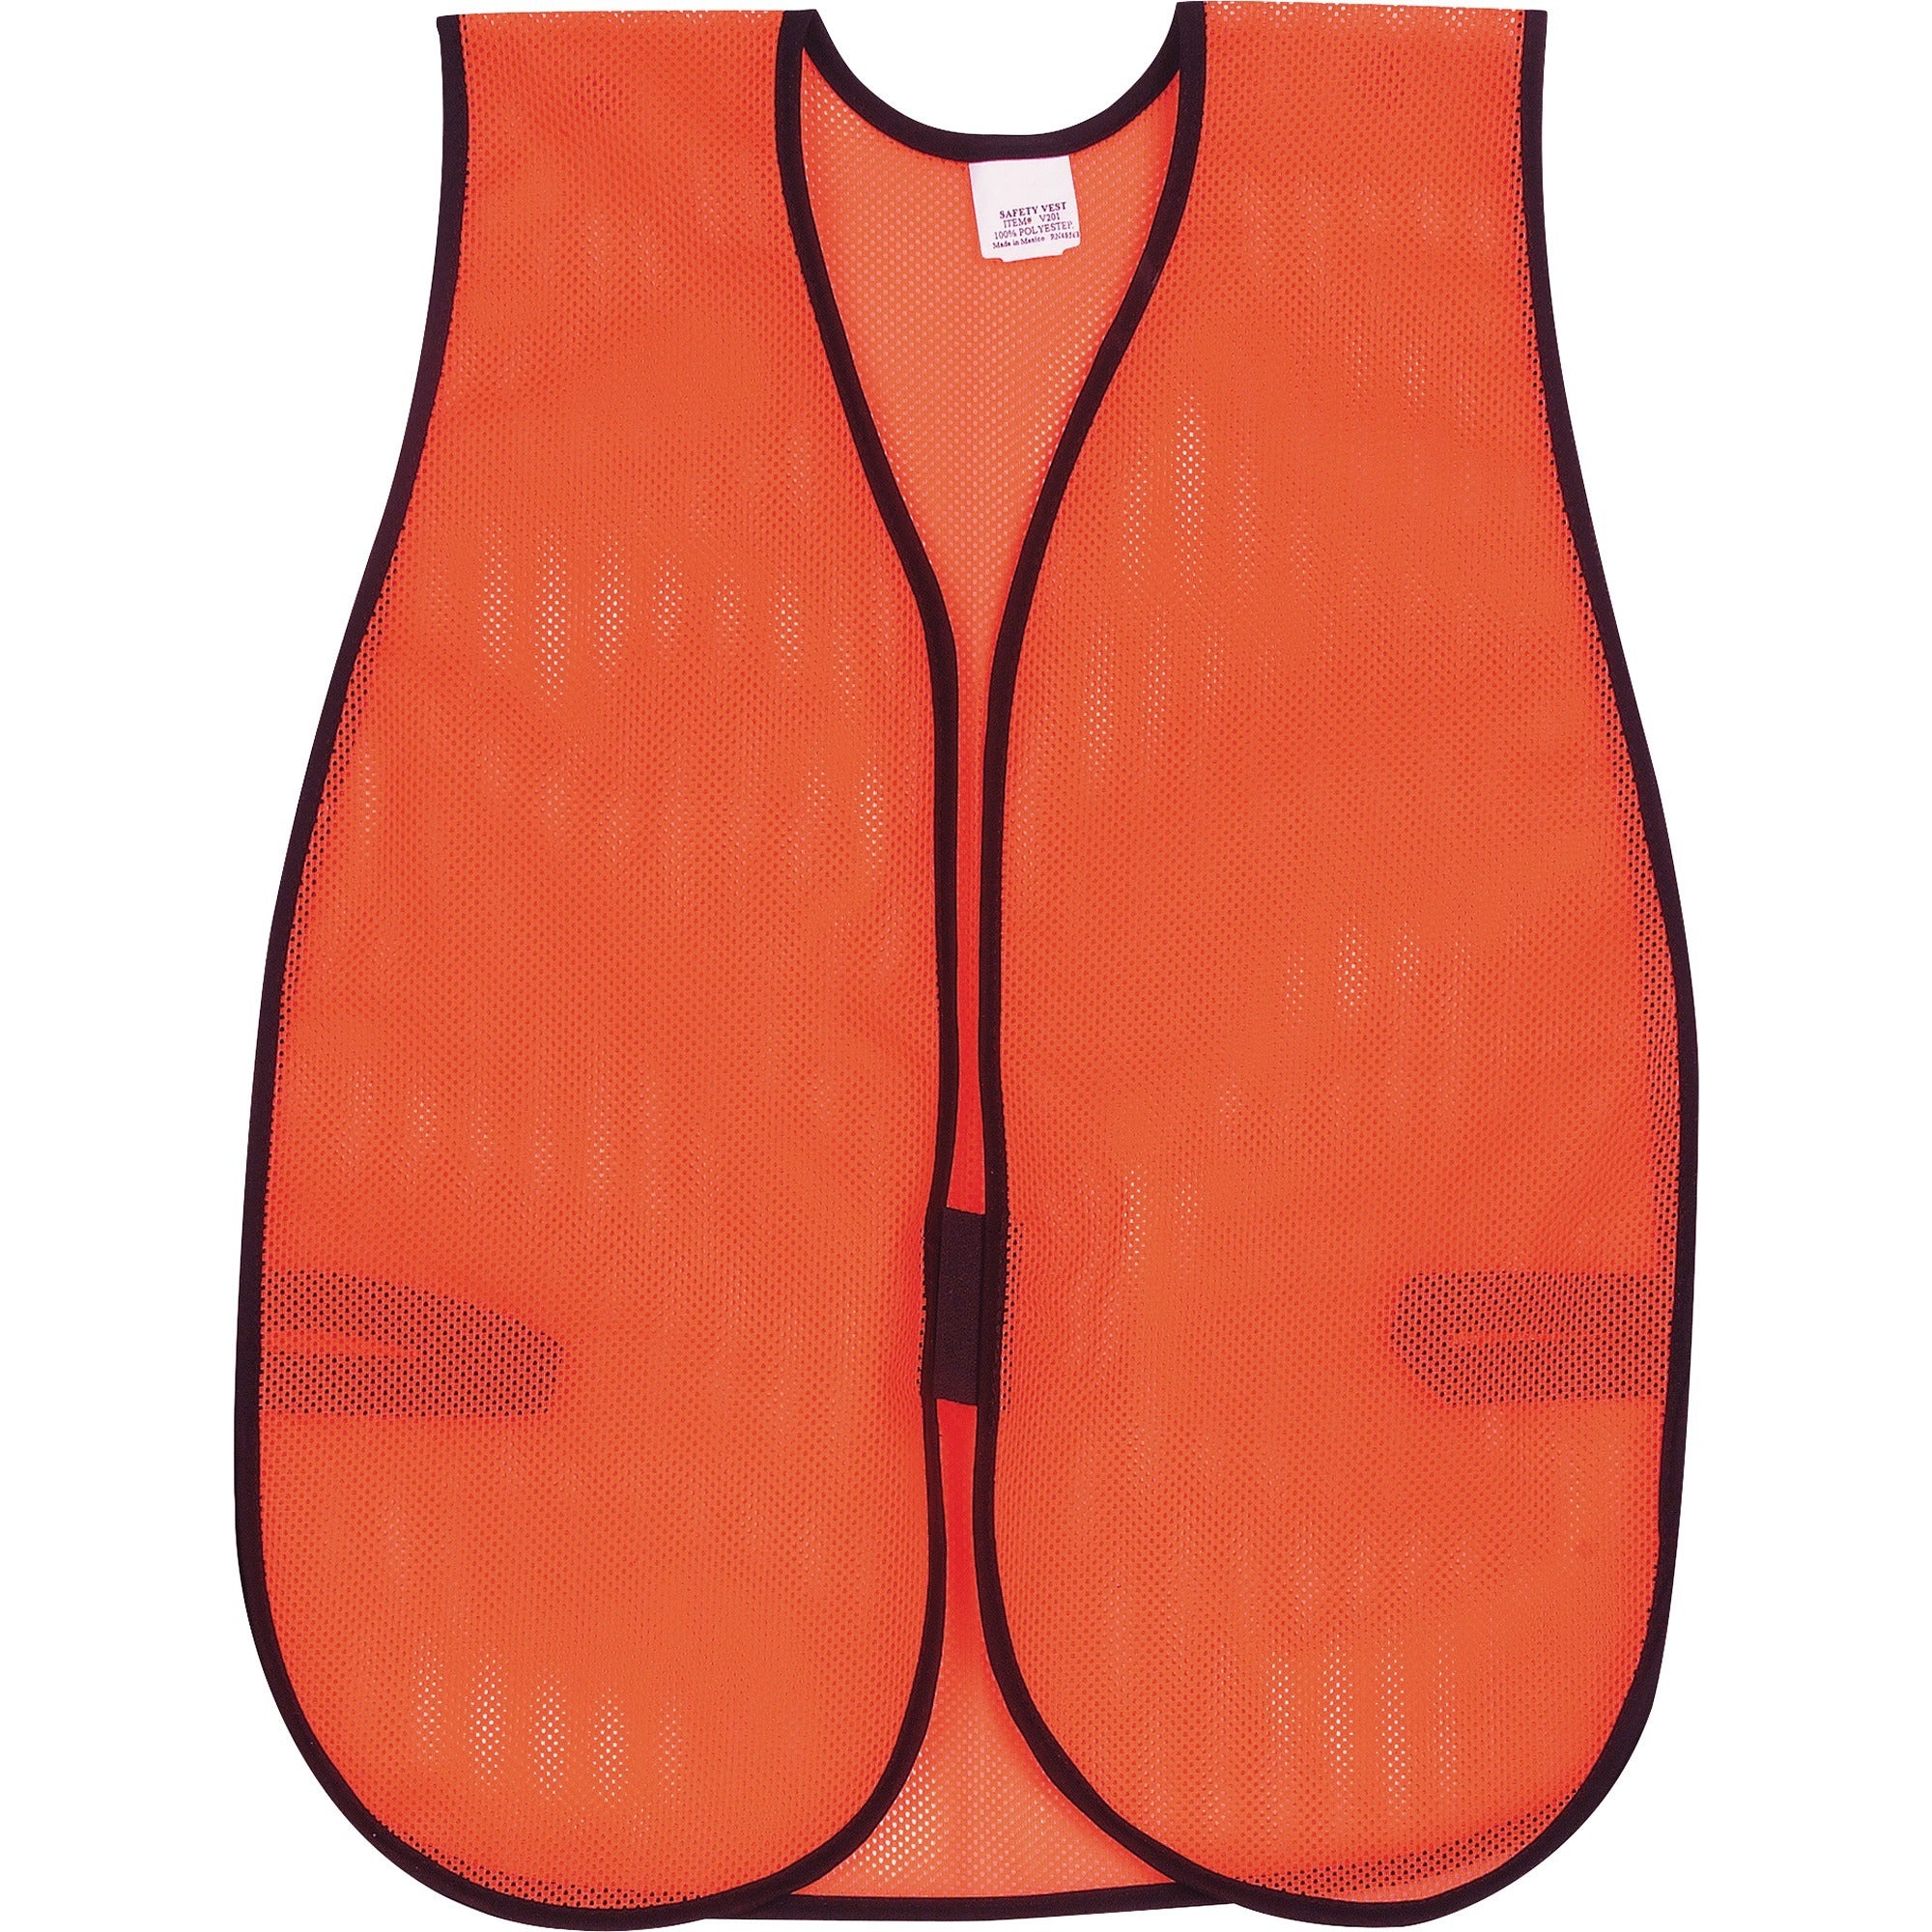 Crews General-purpose Safety Vest - Polyester - Orange - Elastic Strap, Hook & Loop, Comfortable, Washable, Lightweight - 1 Each - 